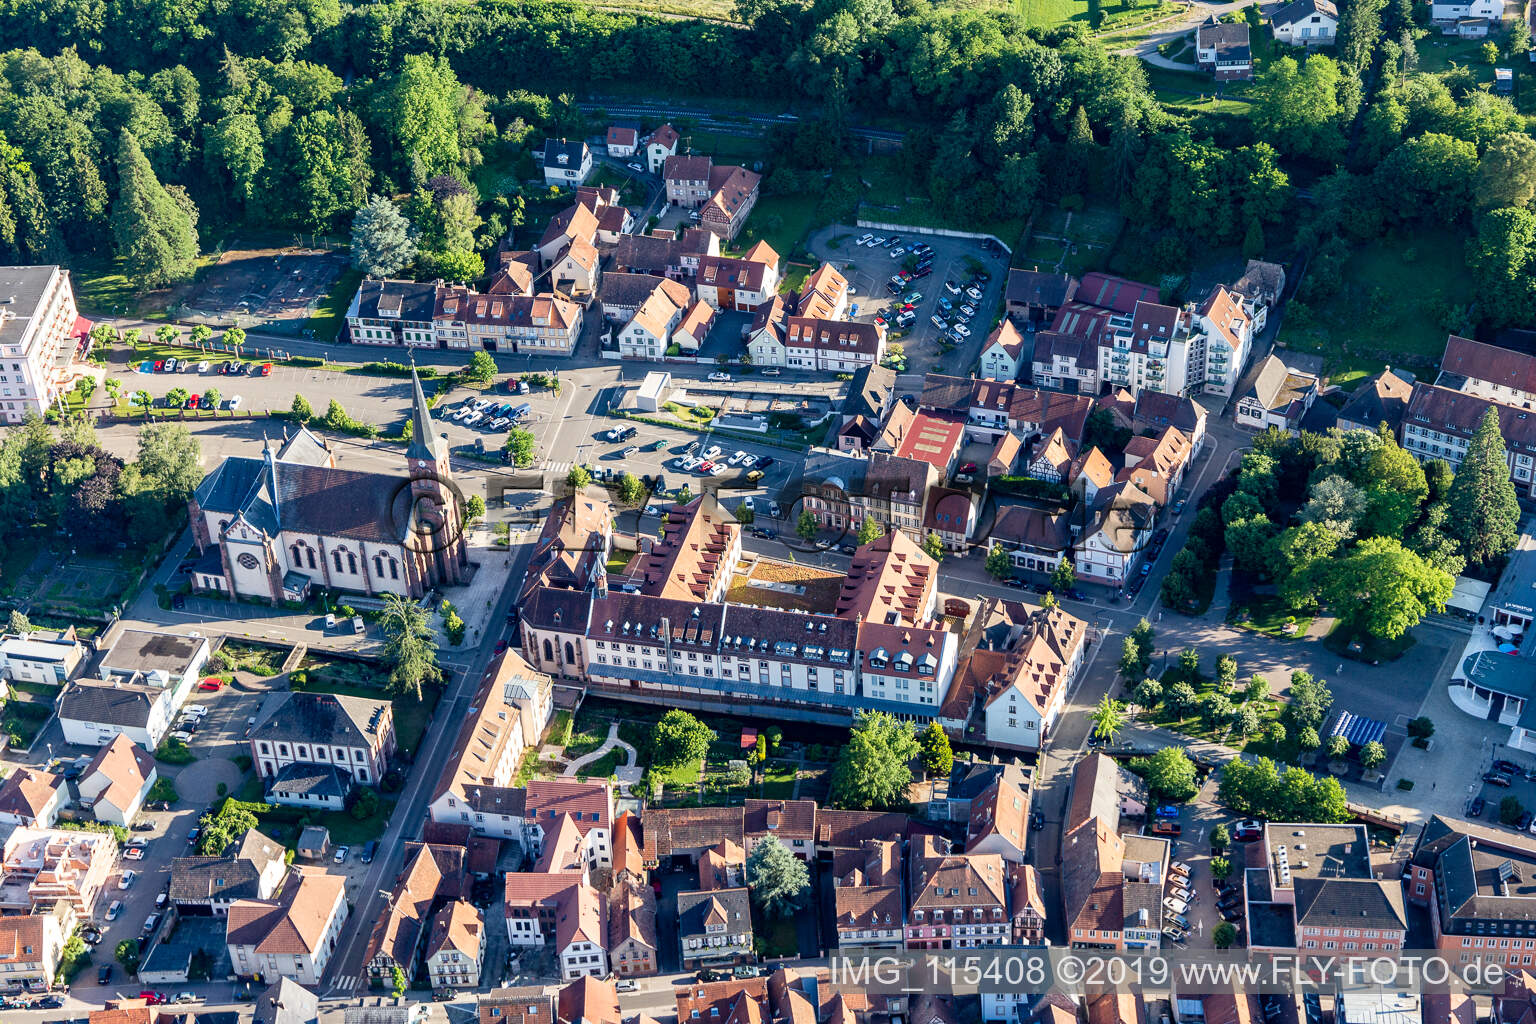 Luftbild von Niederbronn-les-Bains im Bundesland Bas-Rhin, Frankreich